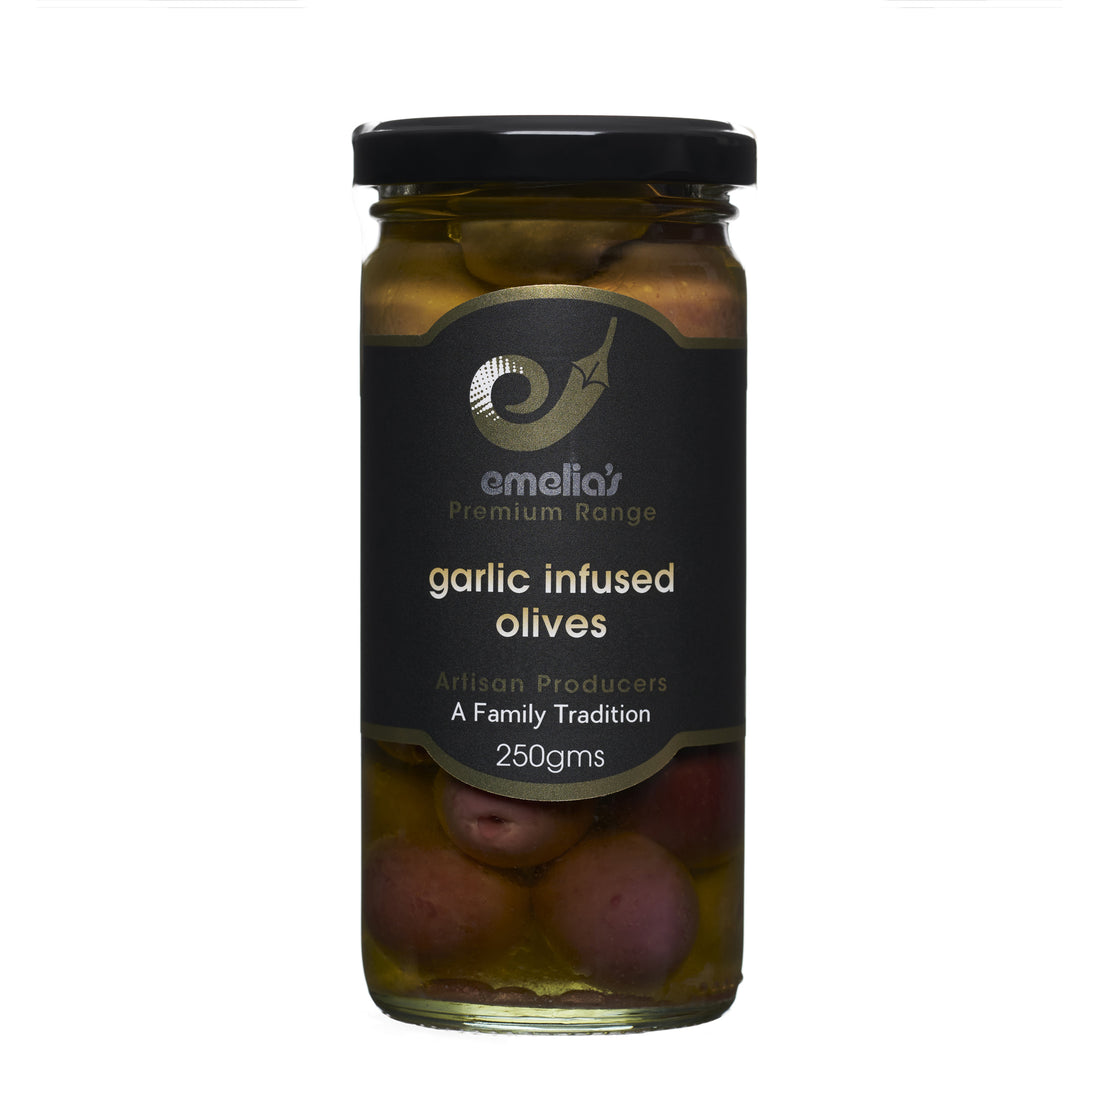 Garlic infused olives